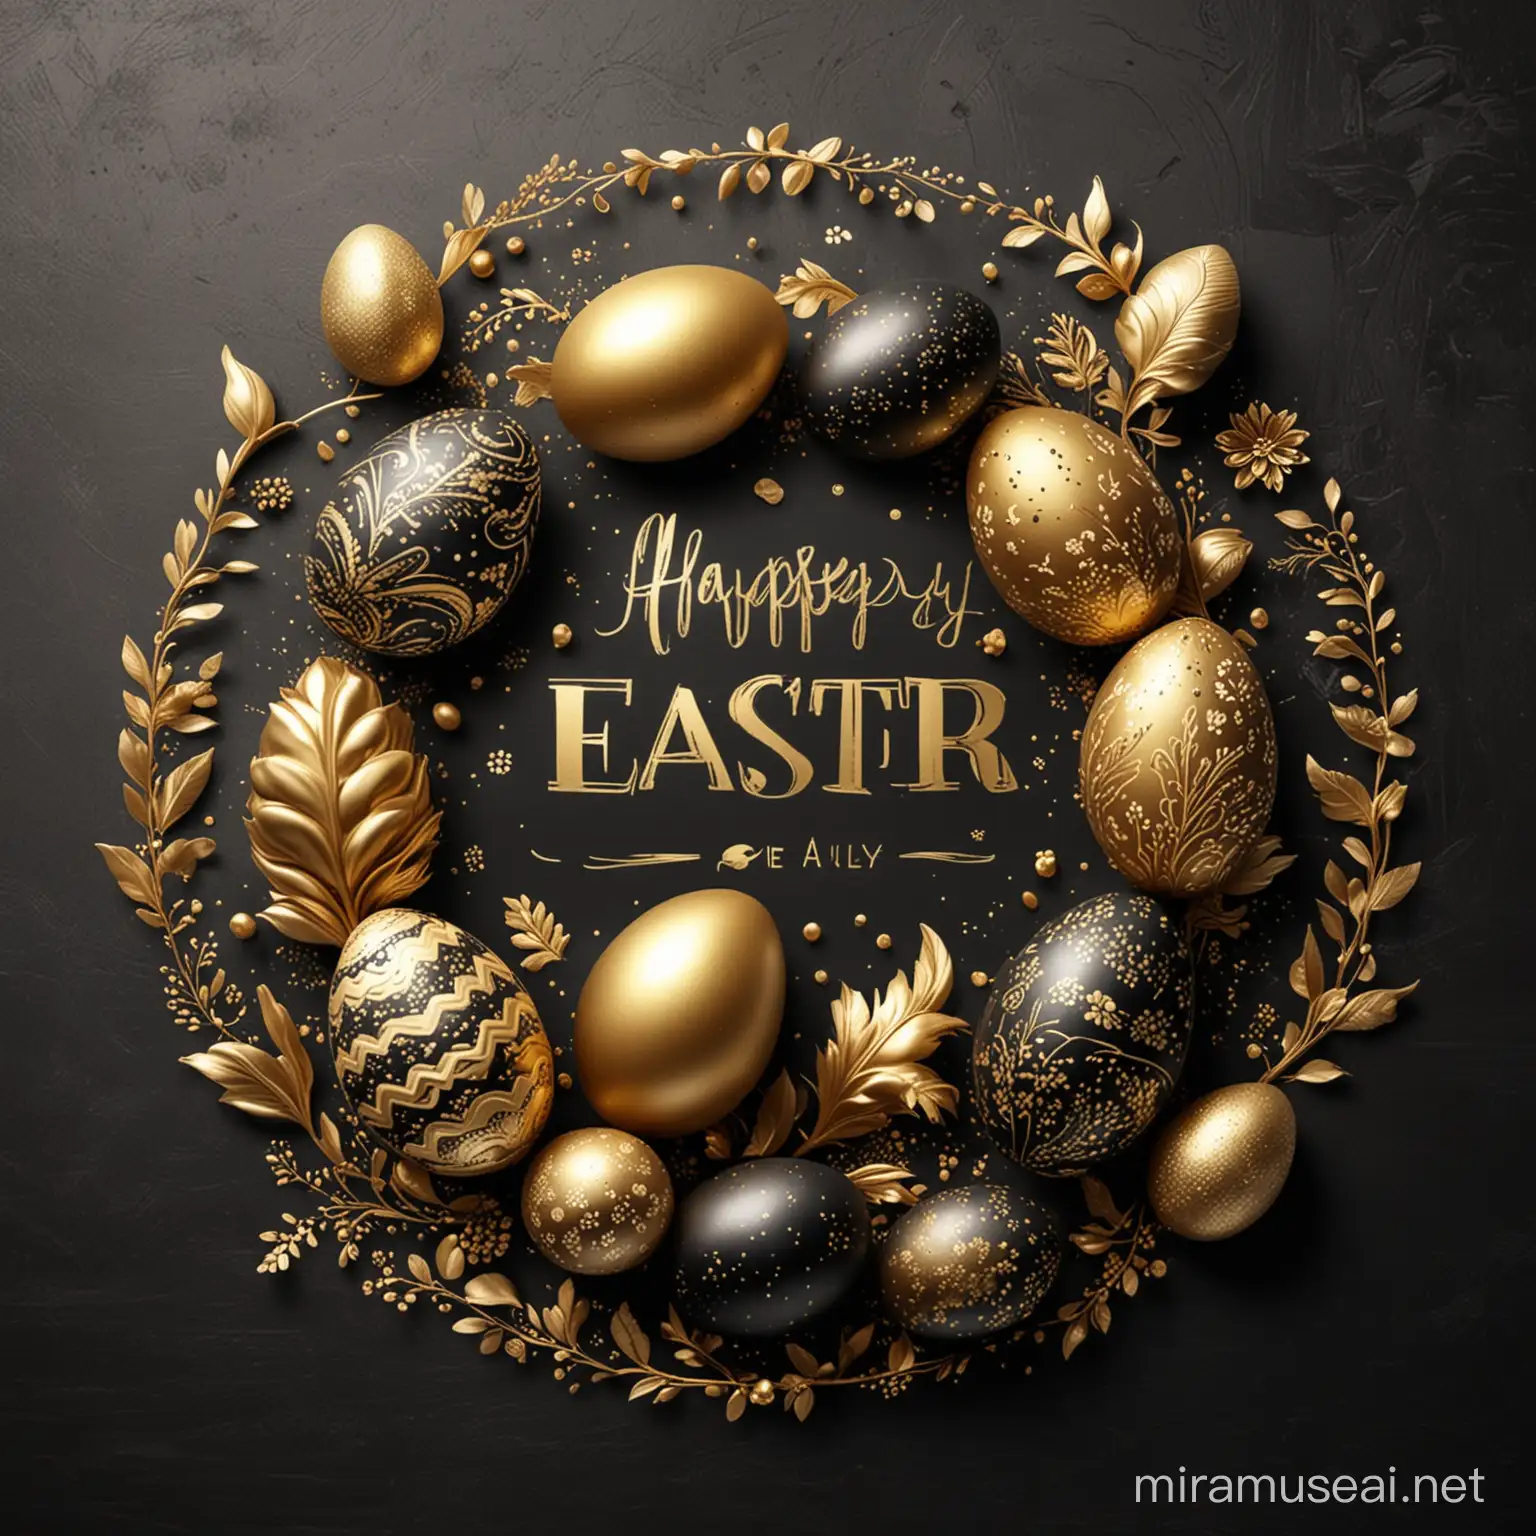 Easter Celebration Gold and Black Themed Festive Gathering